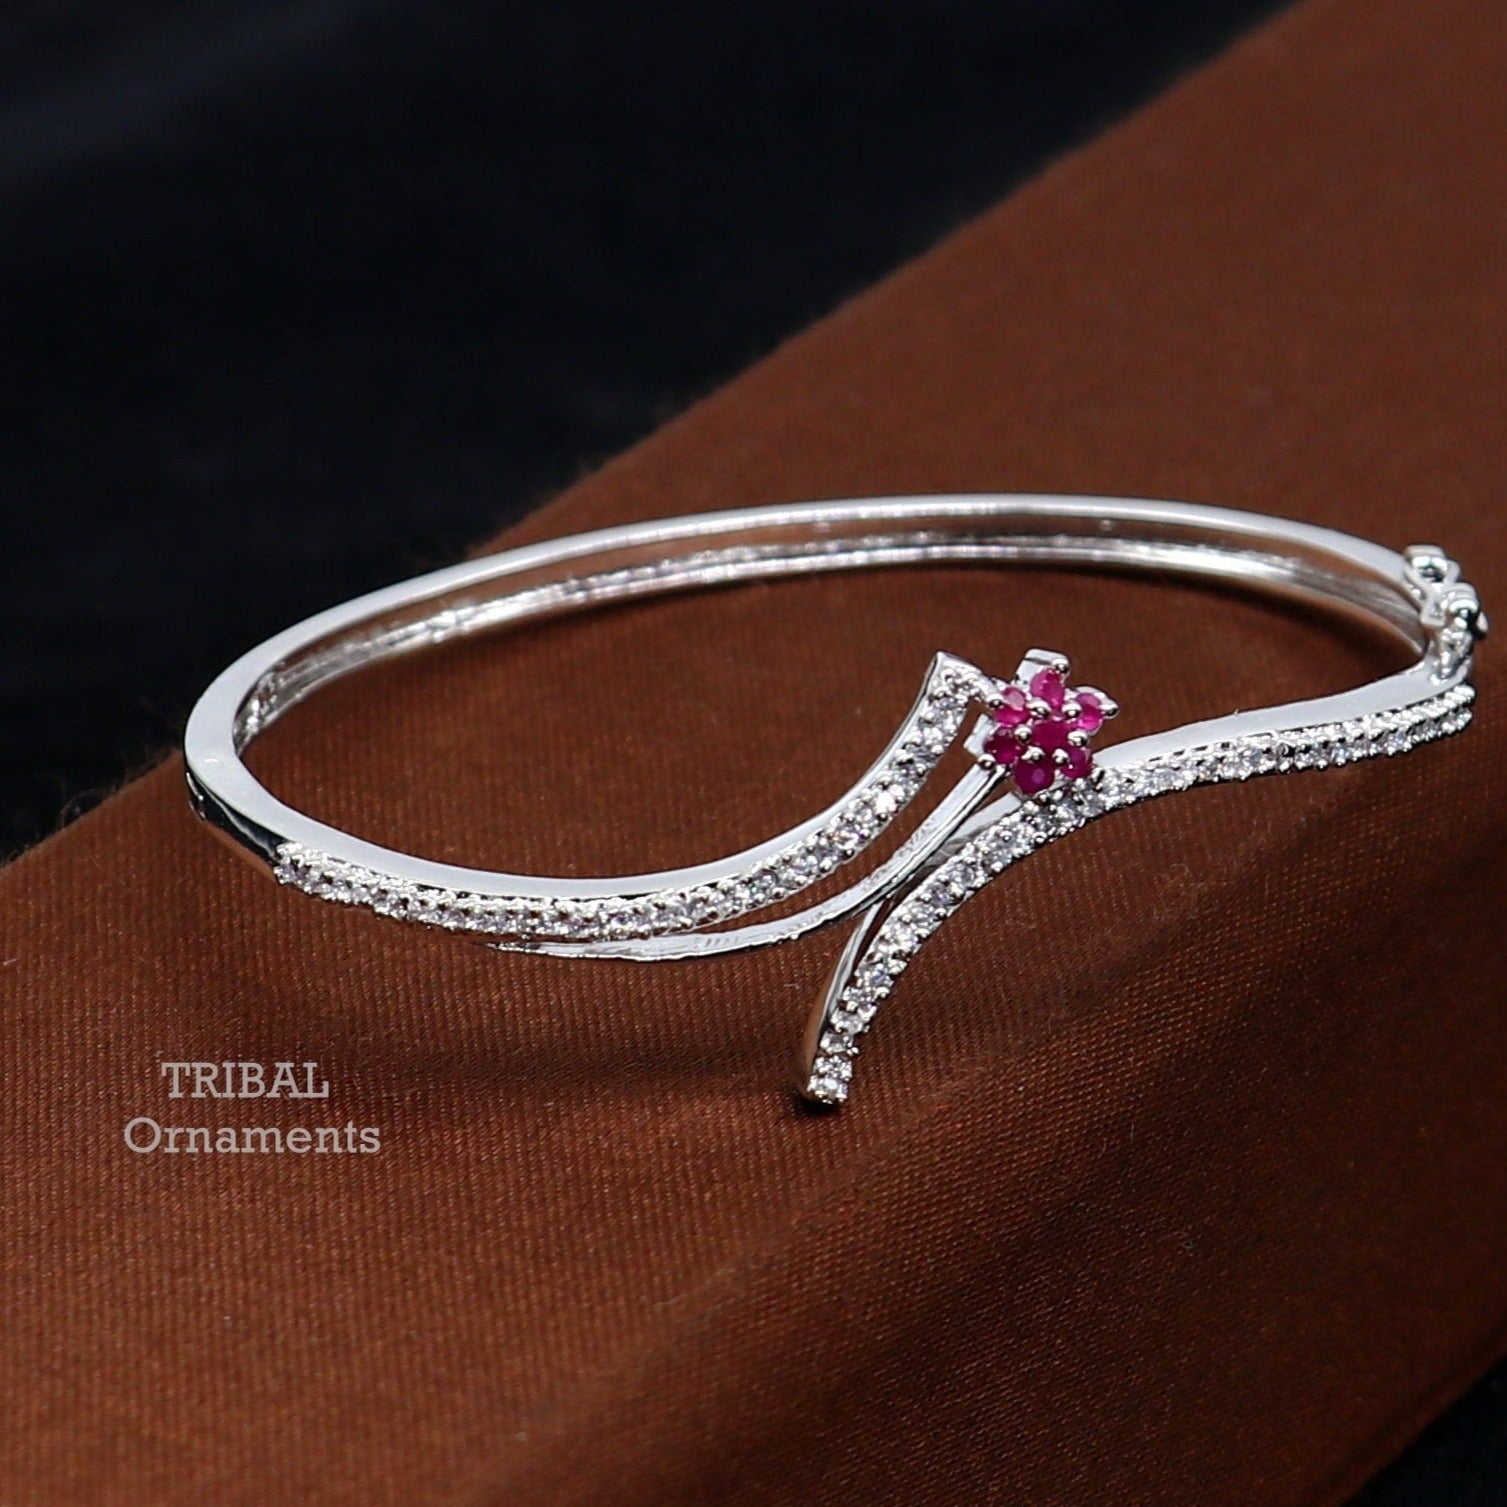 925 Sterling Silver Bracelet Stunning Italian Design Jewelry Gift | eBay